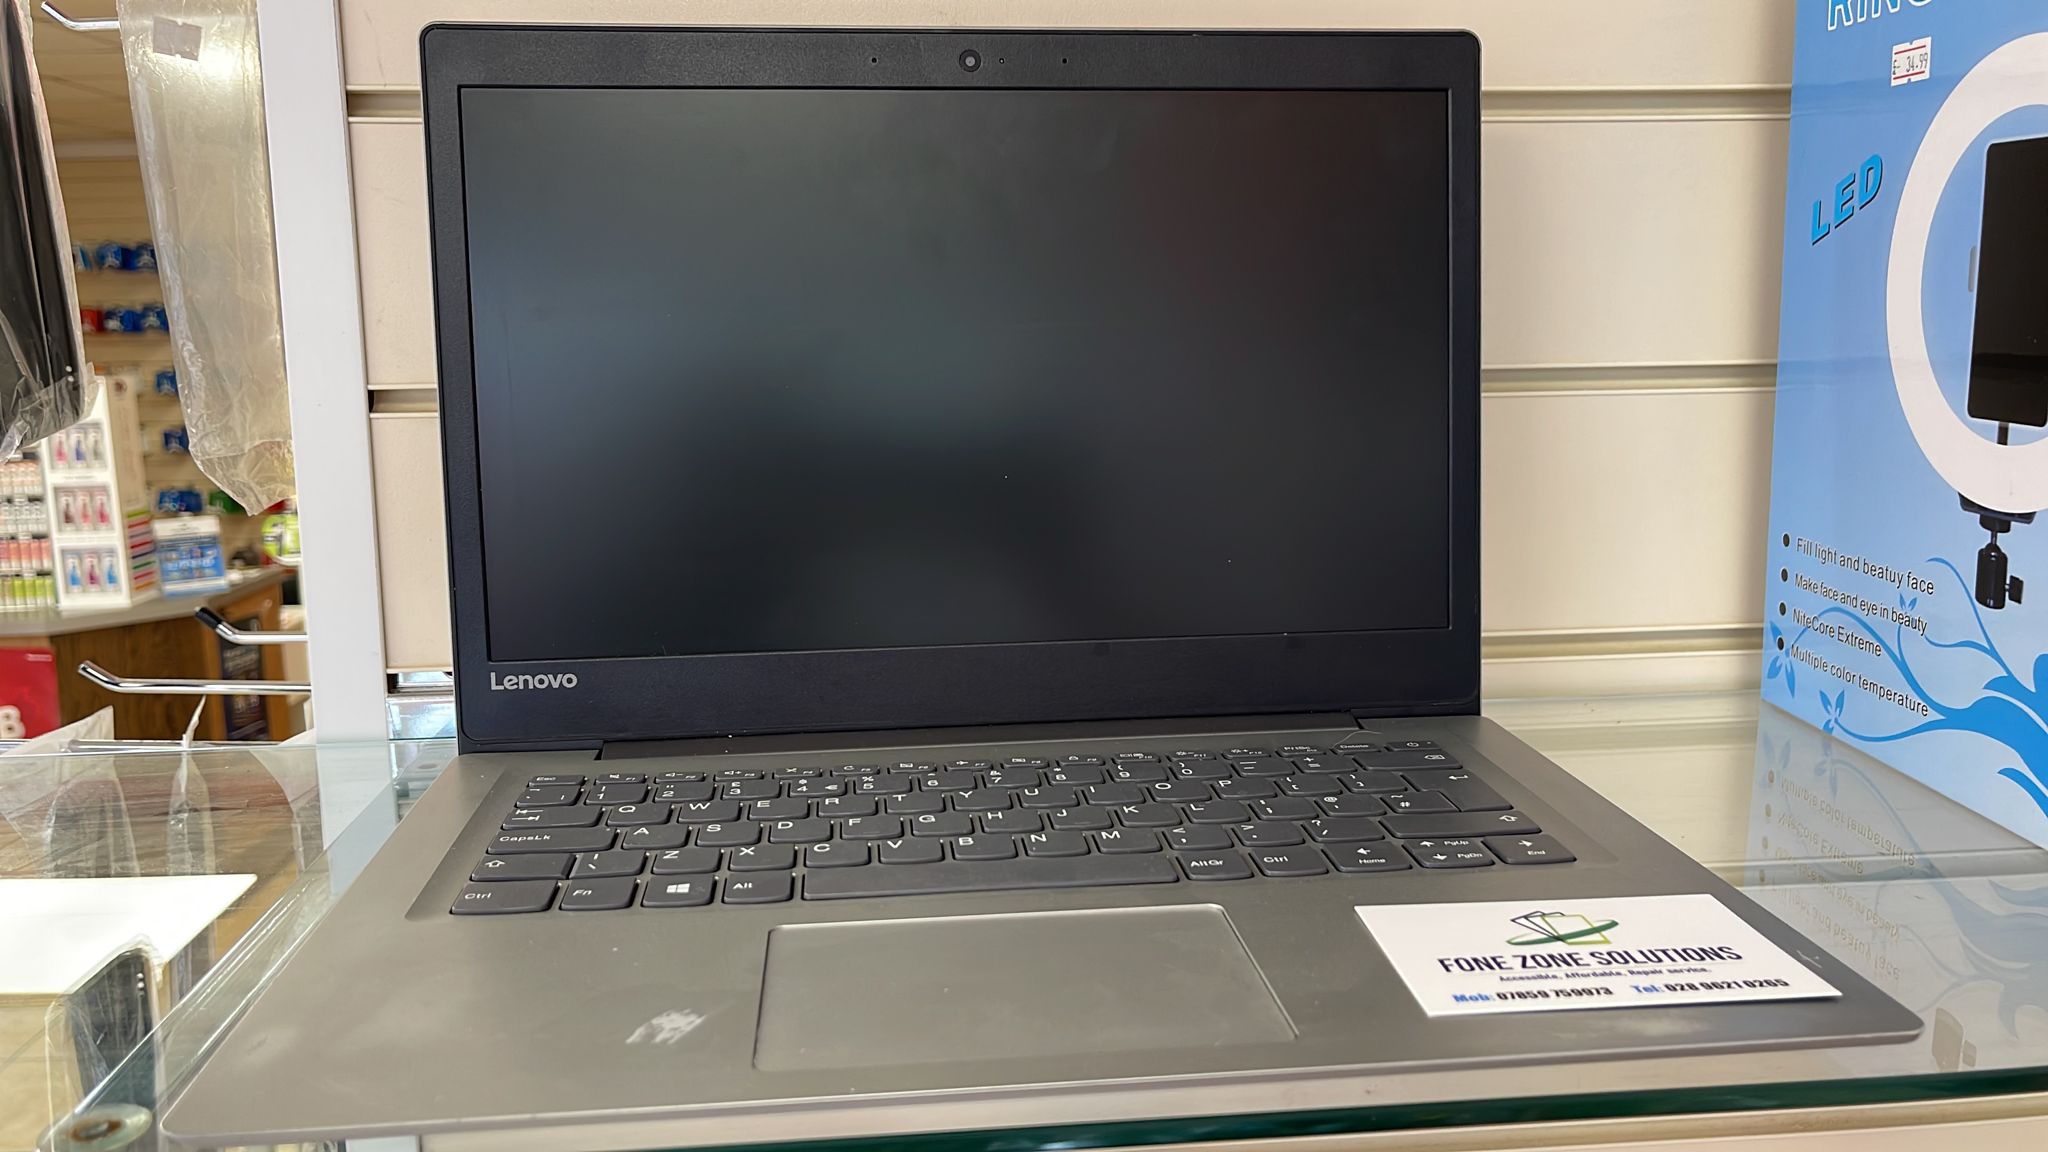 Lenovo S130 Laptop Windows 10 60gb Hdd 4gb Ram Dual Core Processor @1.1ghz